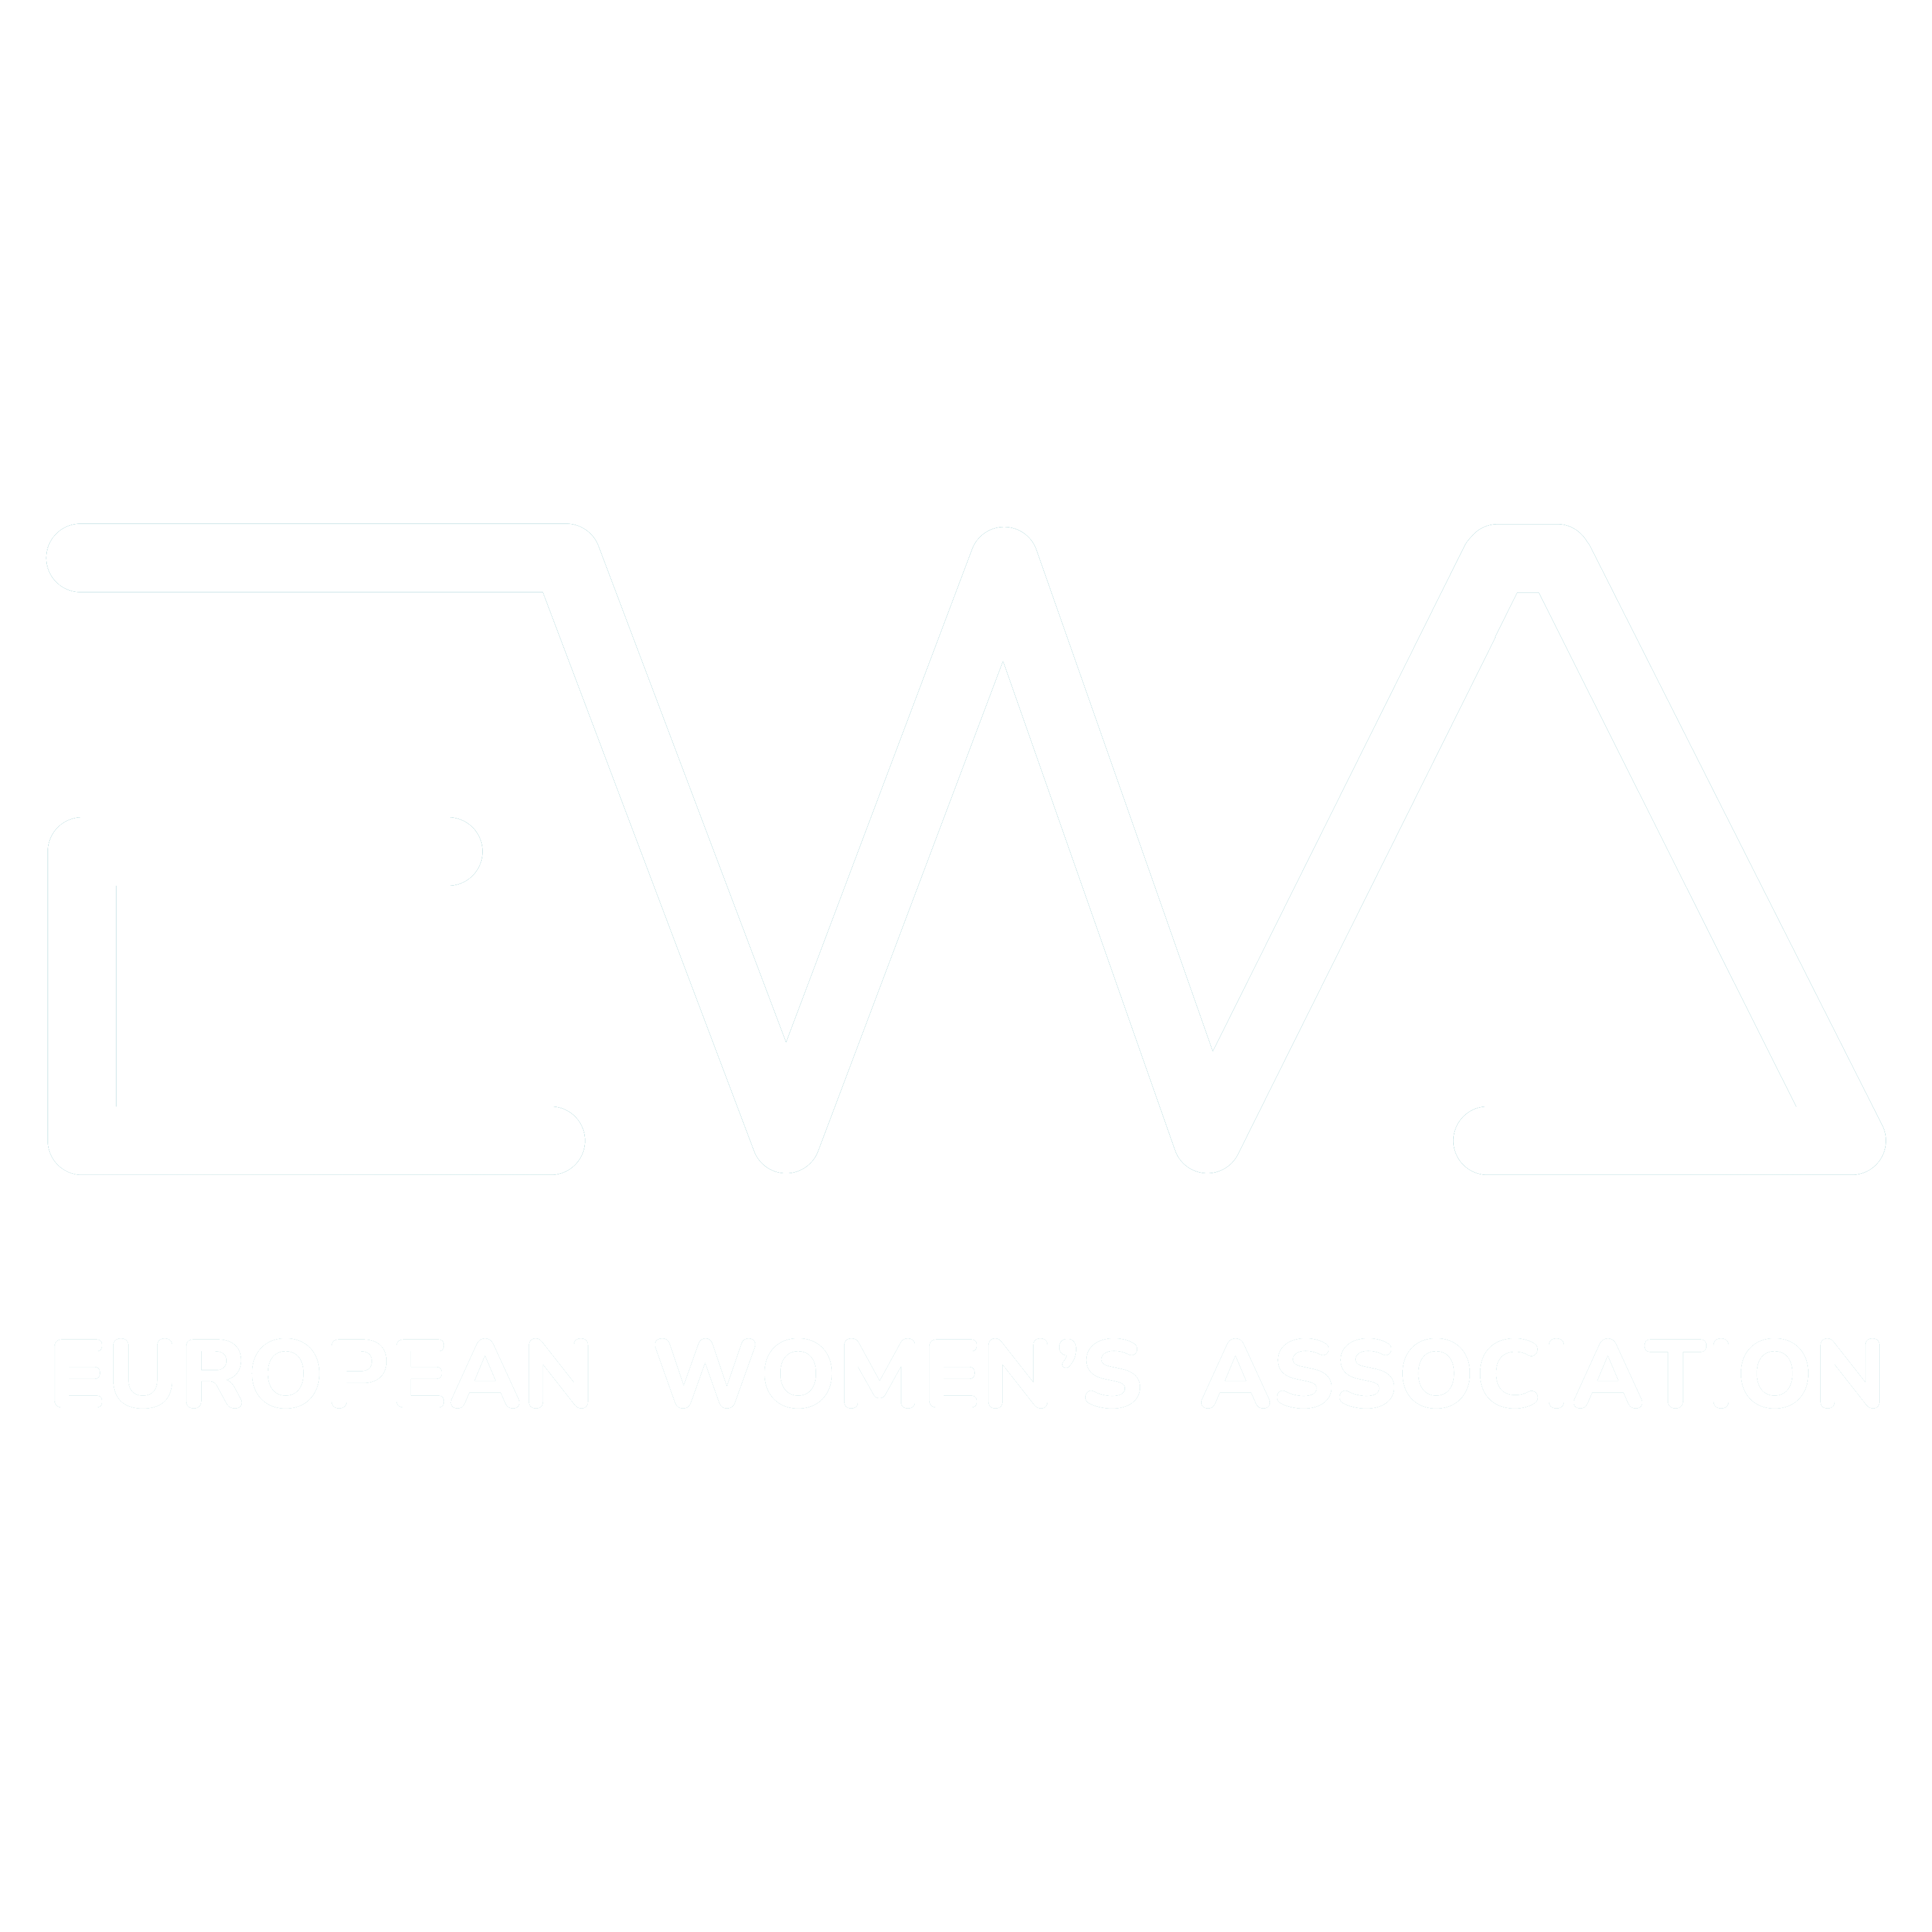 FCE-VVB & EWA Networking Event in Belgium